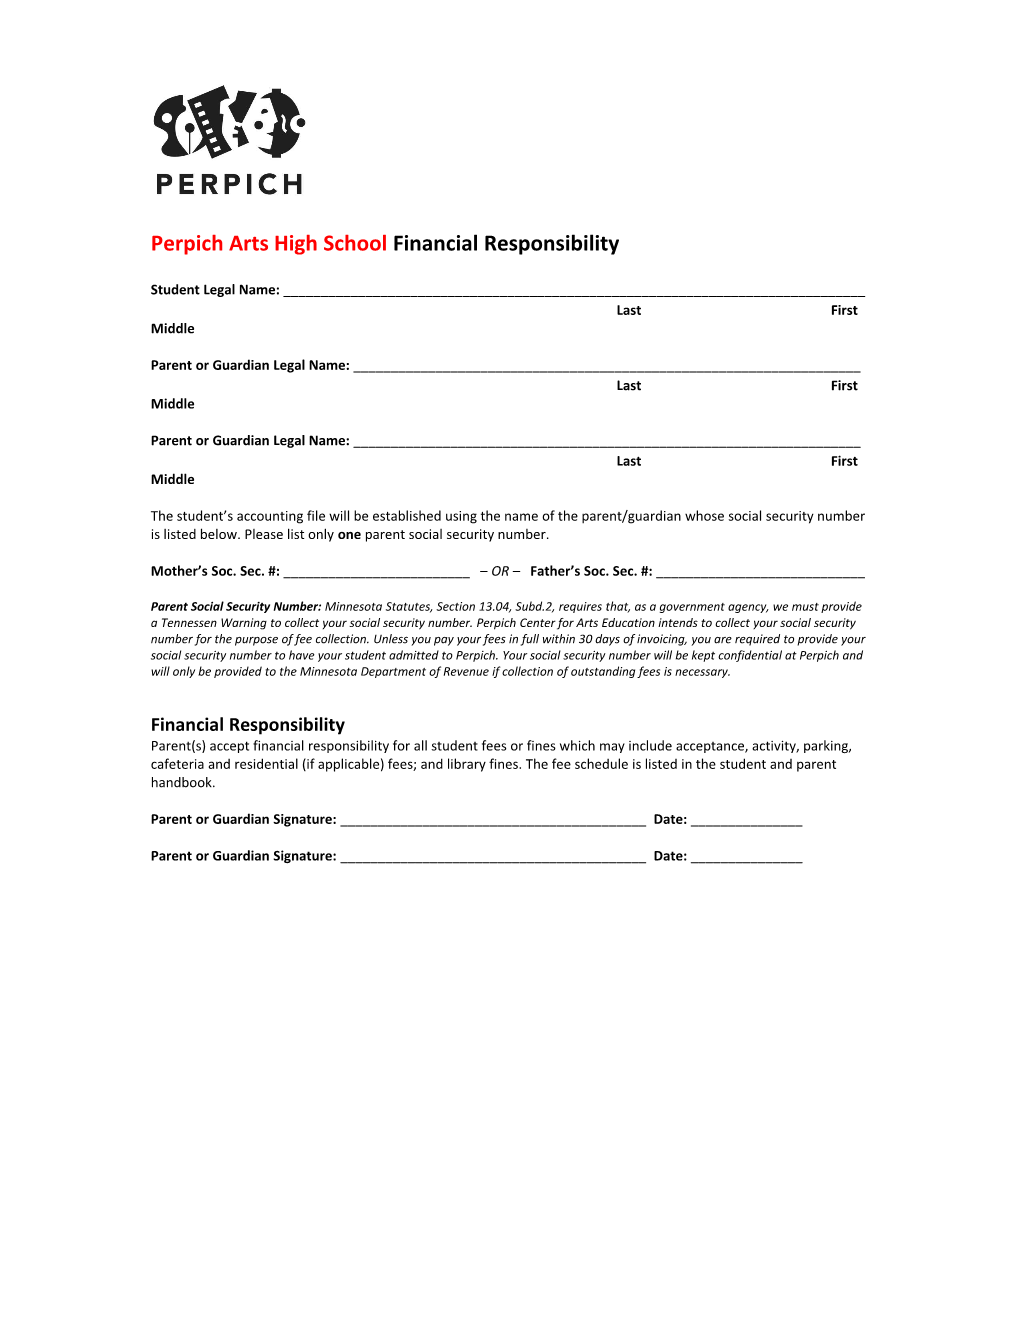 Perpich Arts High School Financial Responsibility